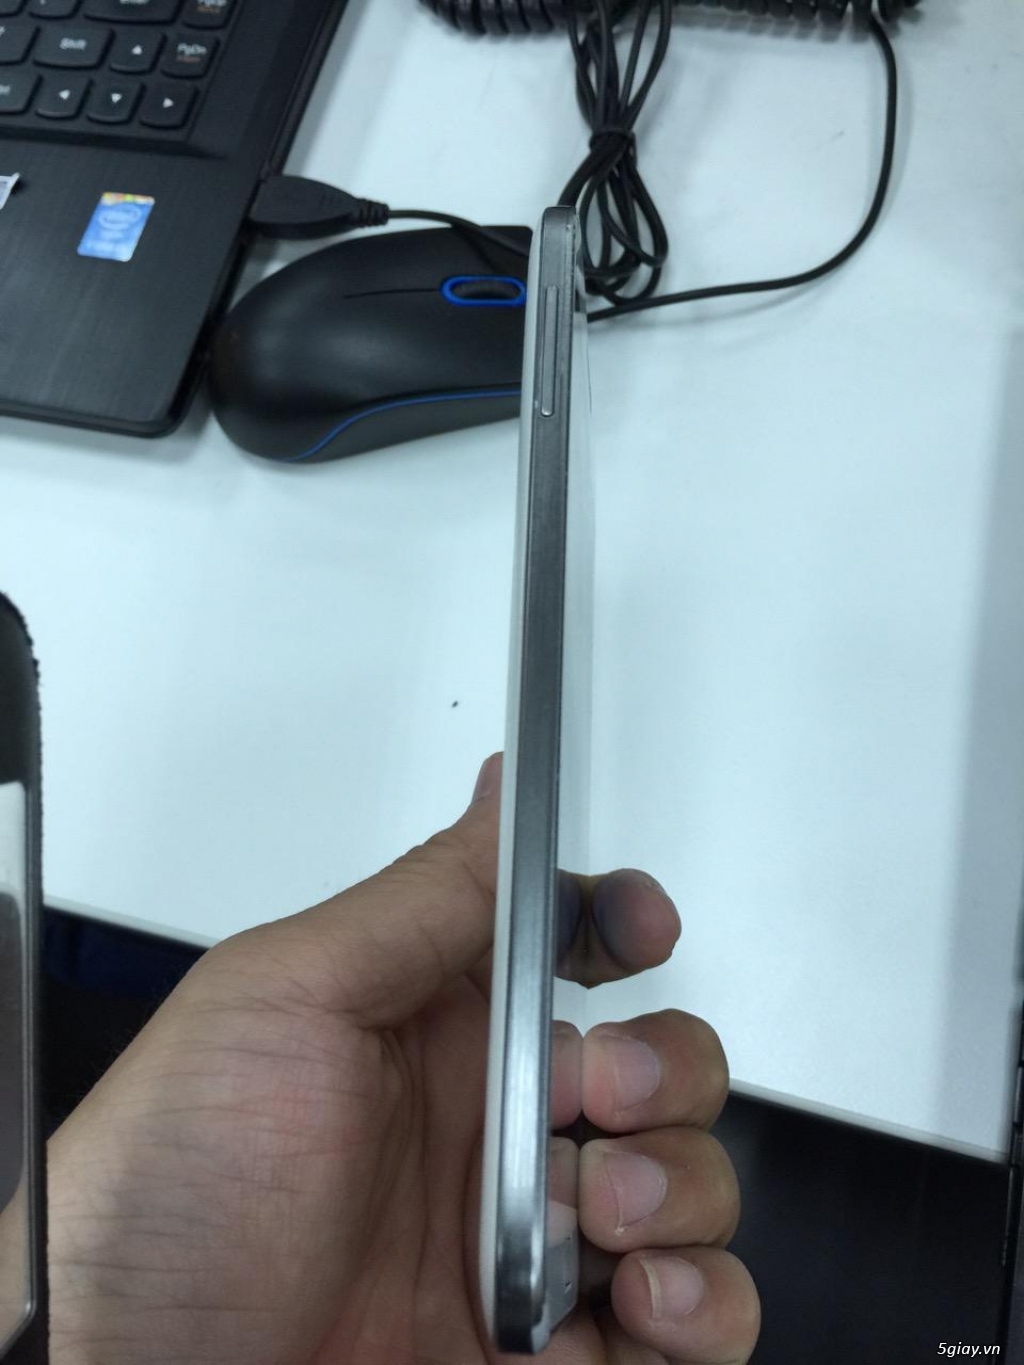 Samsung E7 98% chưa sửa chữa - 6